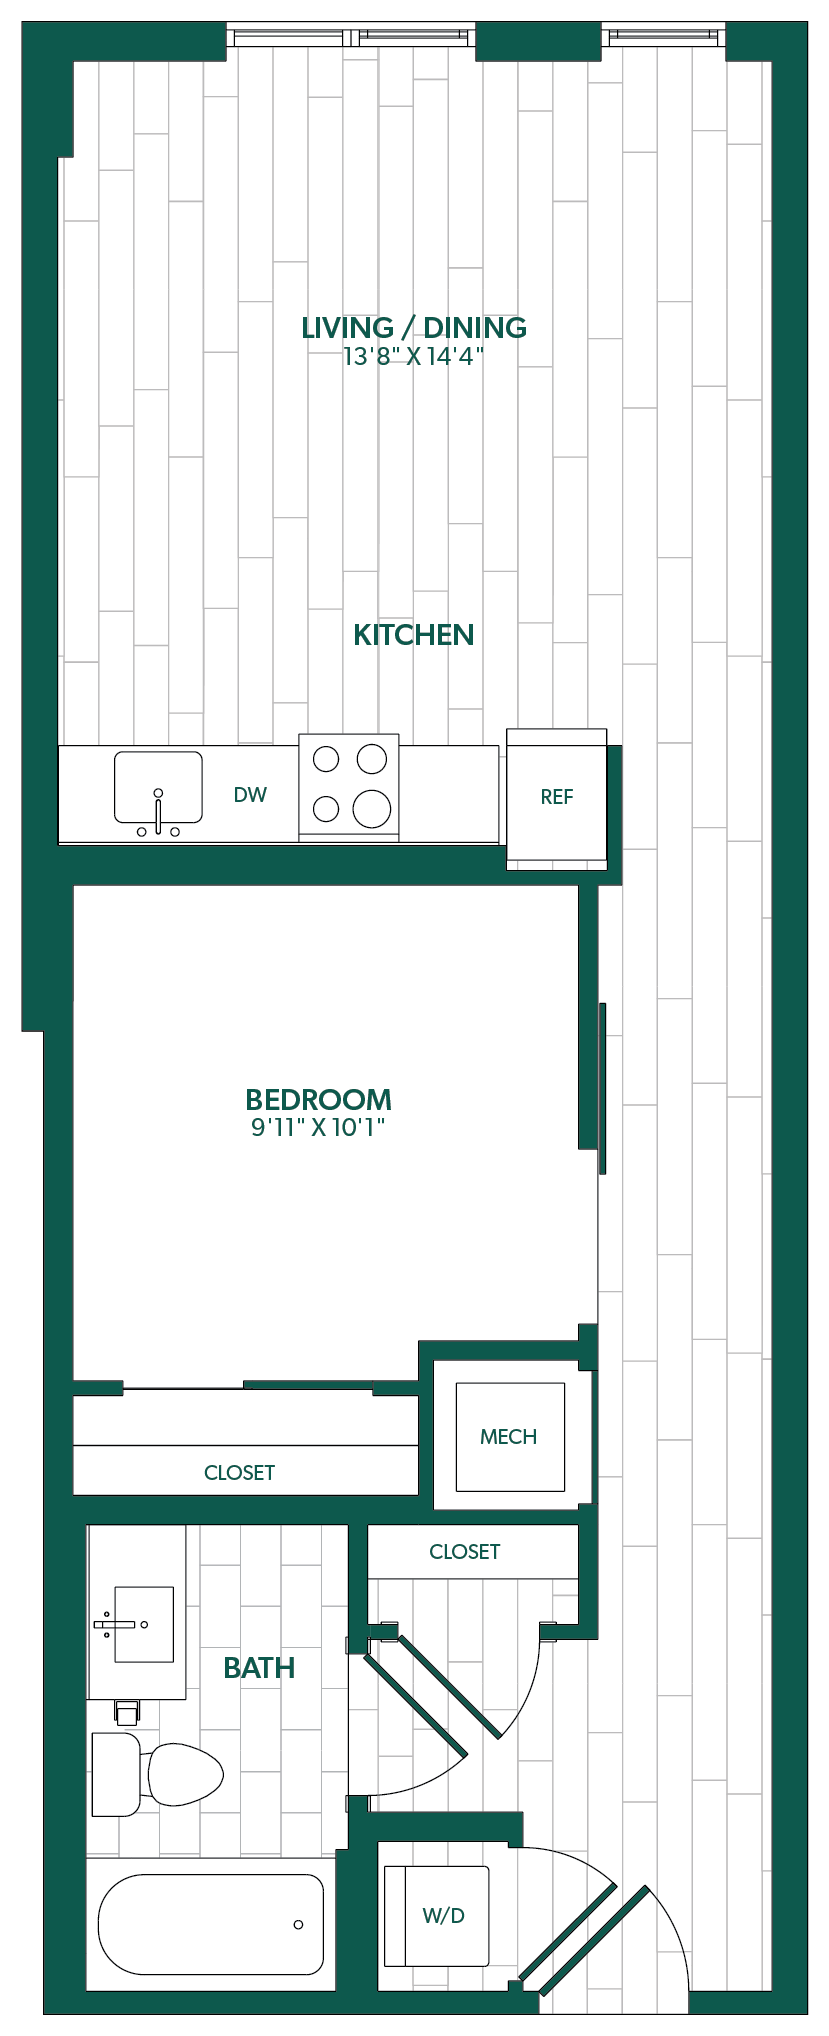 Floor Plan Image of Apartment Apt 0419